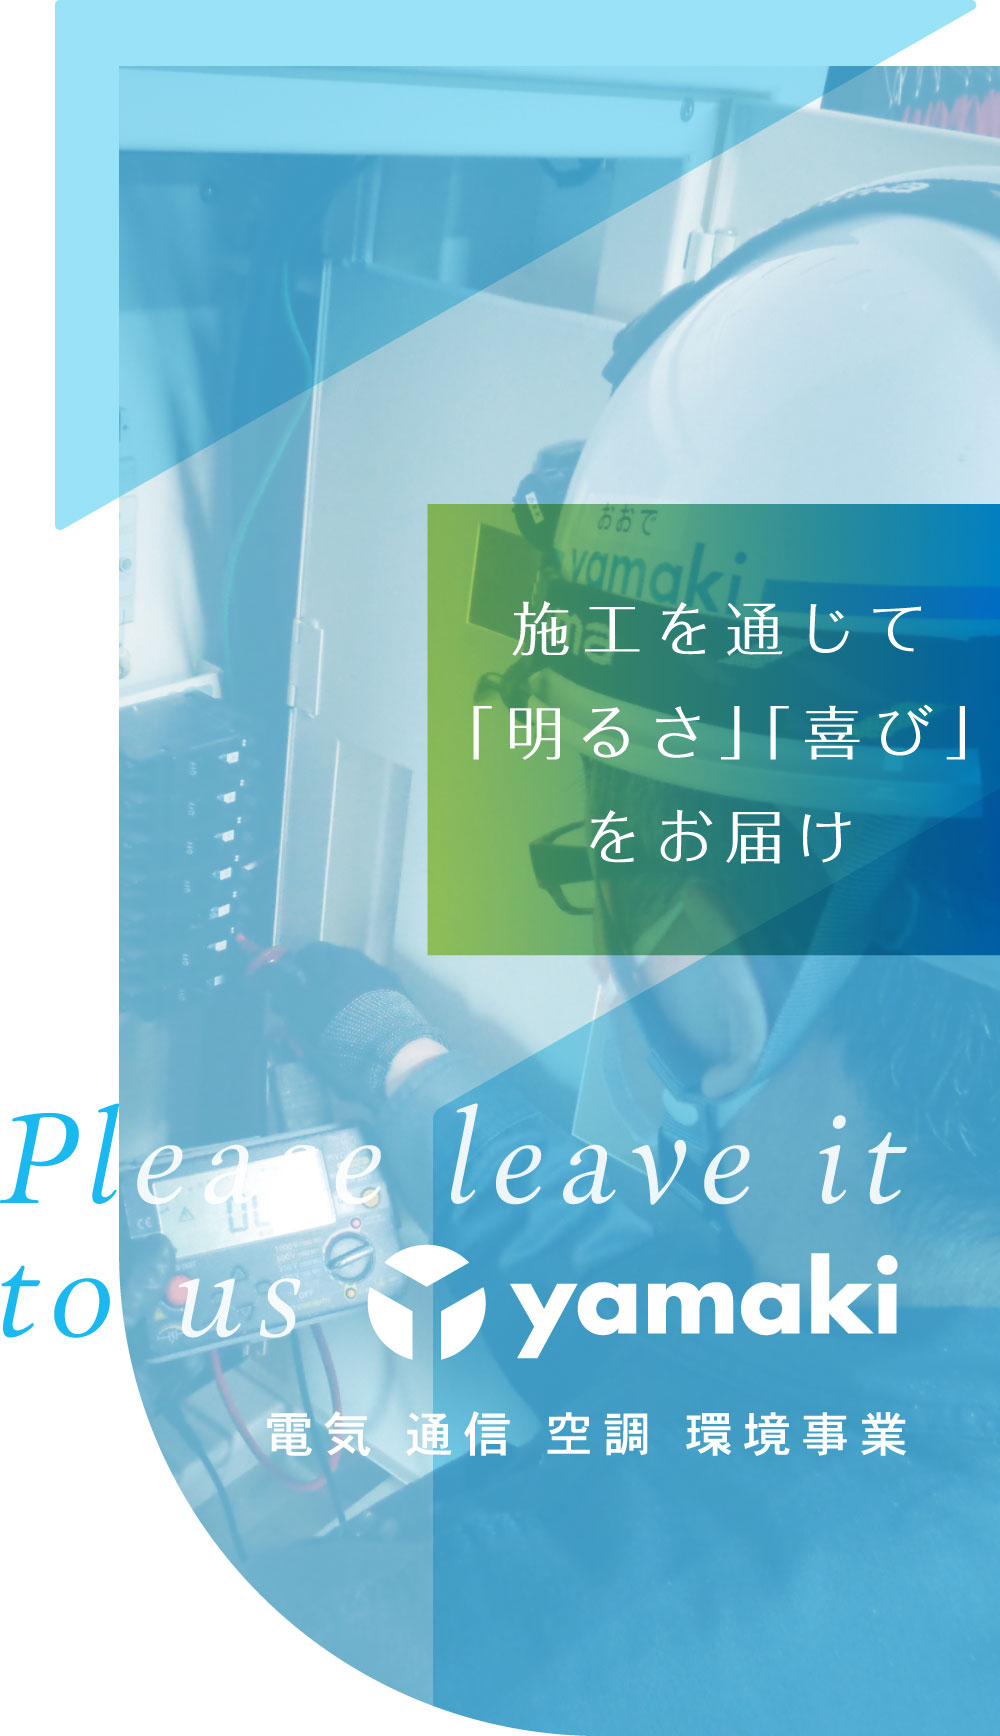 Please leave it to us yamaki 電気 通信 空調 環境事業